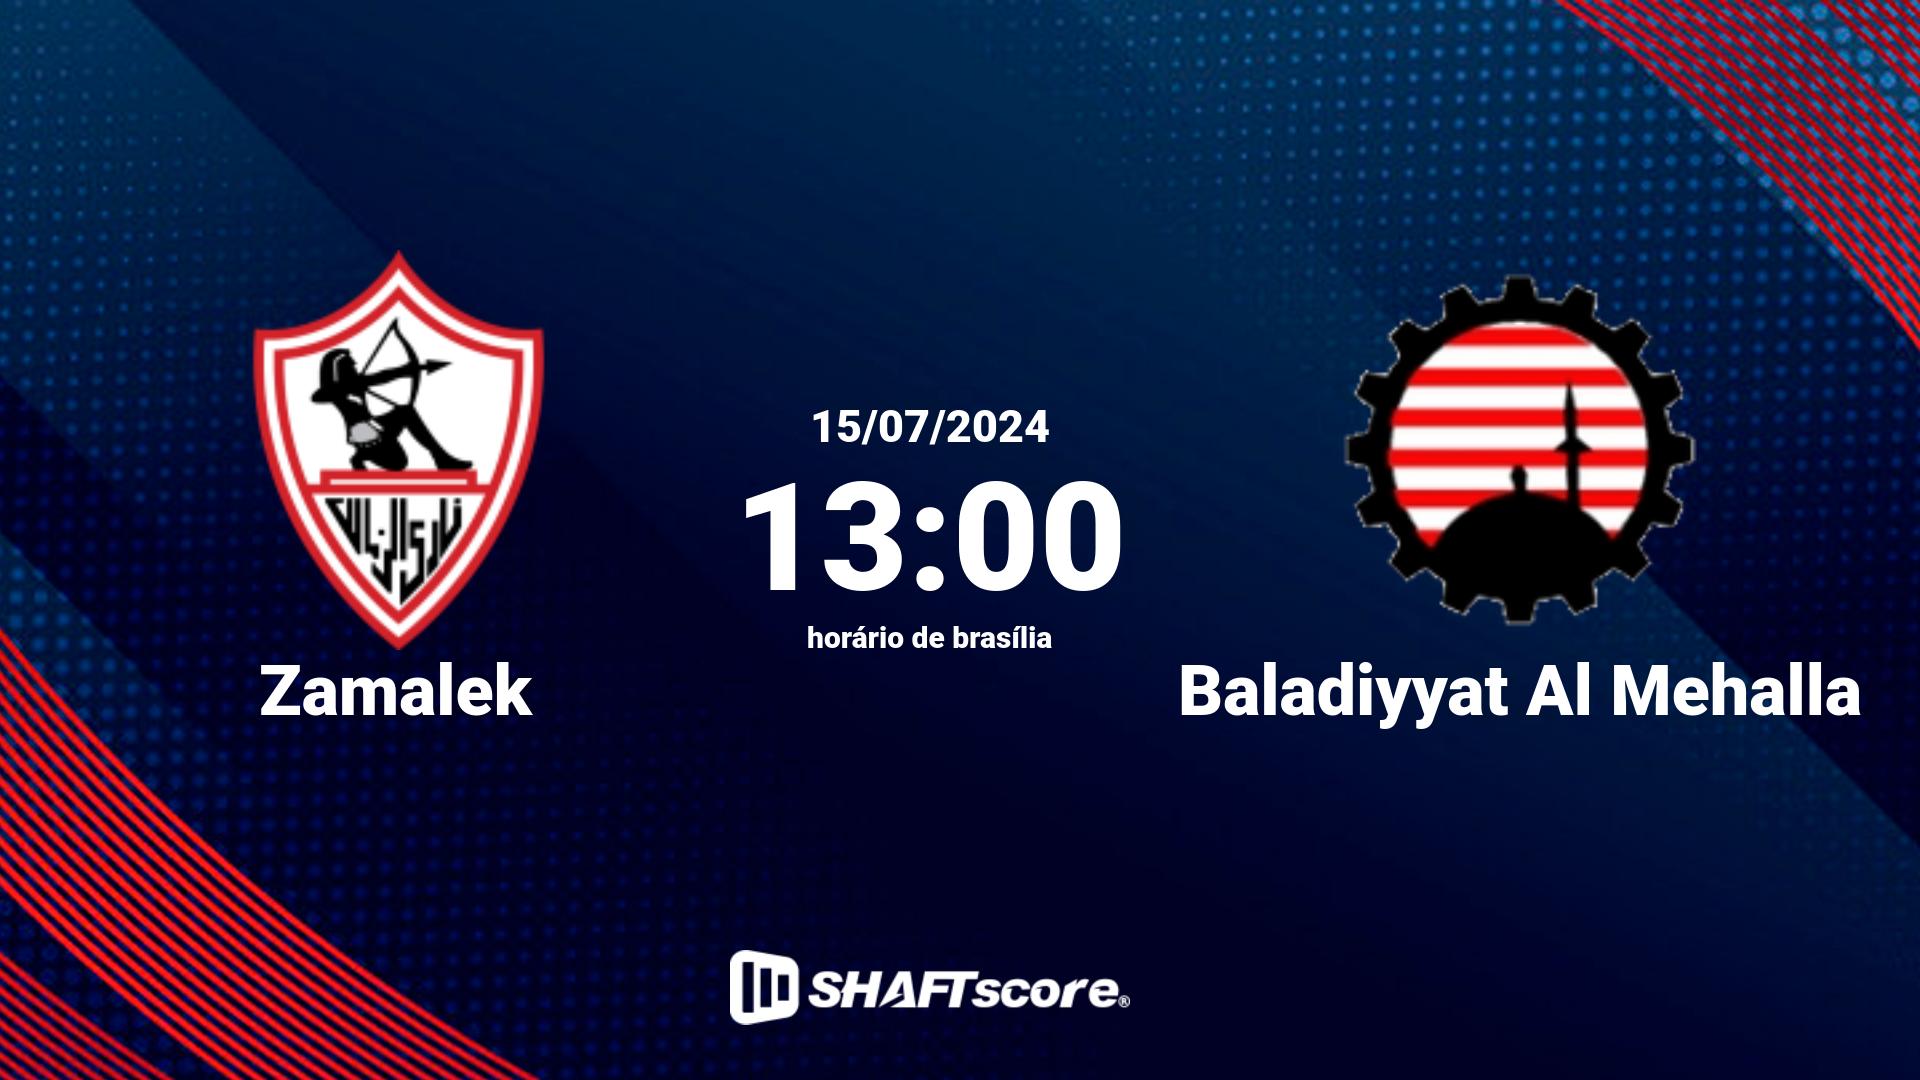 Estatísticas do jogo Zamalek vs Baladiyyat Al Mehalla 15.07 13:00